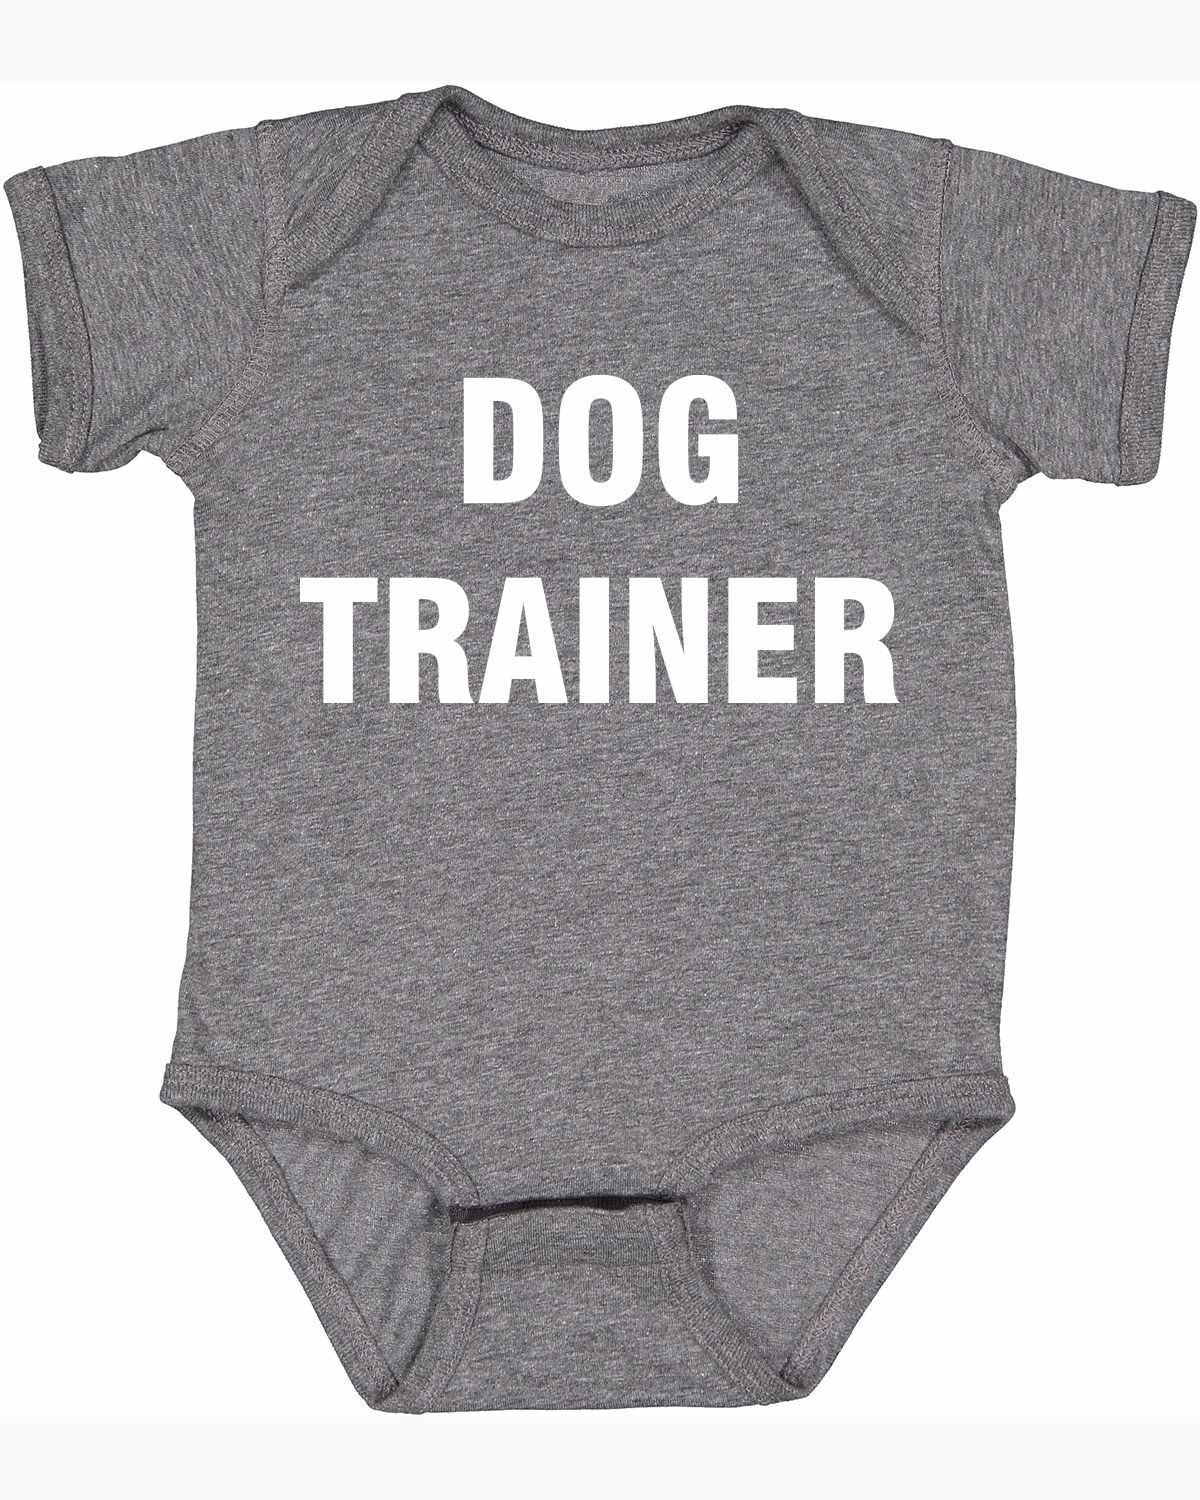 DOG TRAINER on Infant BodySuit